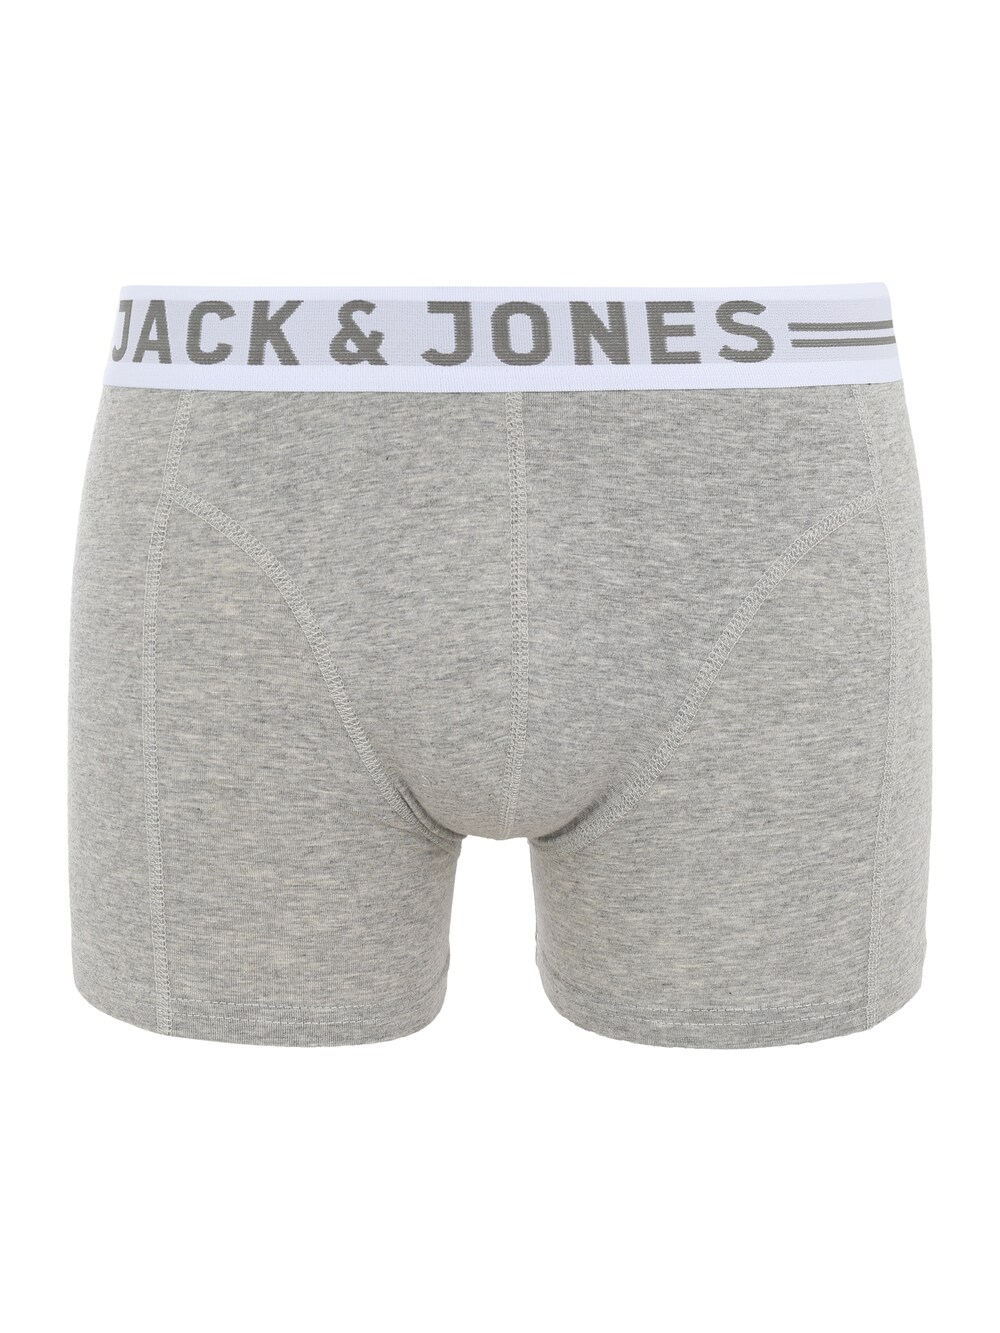 Трусы боксеры JACK & JONES Sense, светло-серый/темно-серый/пестрый серый комплект чехлов gross светло серый темно серый